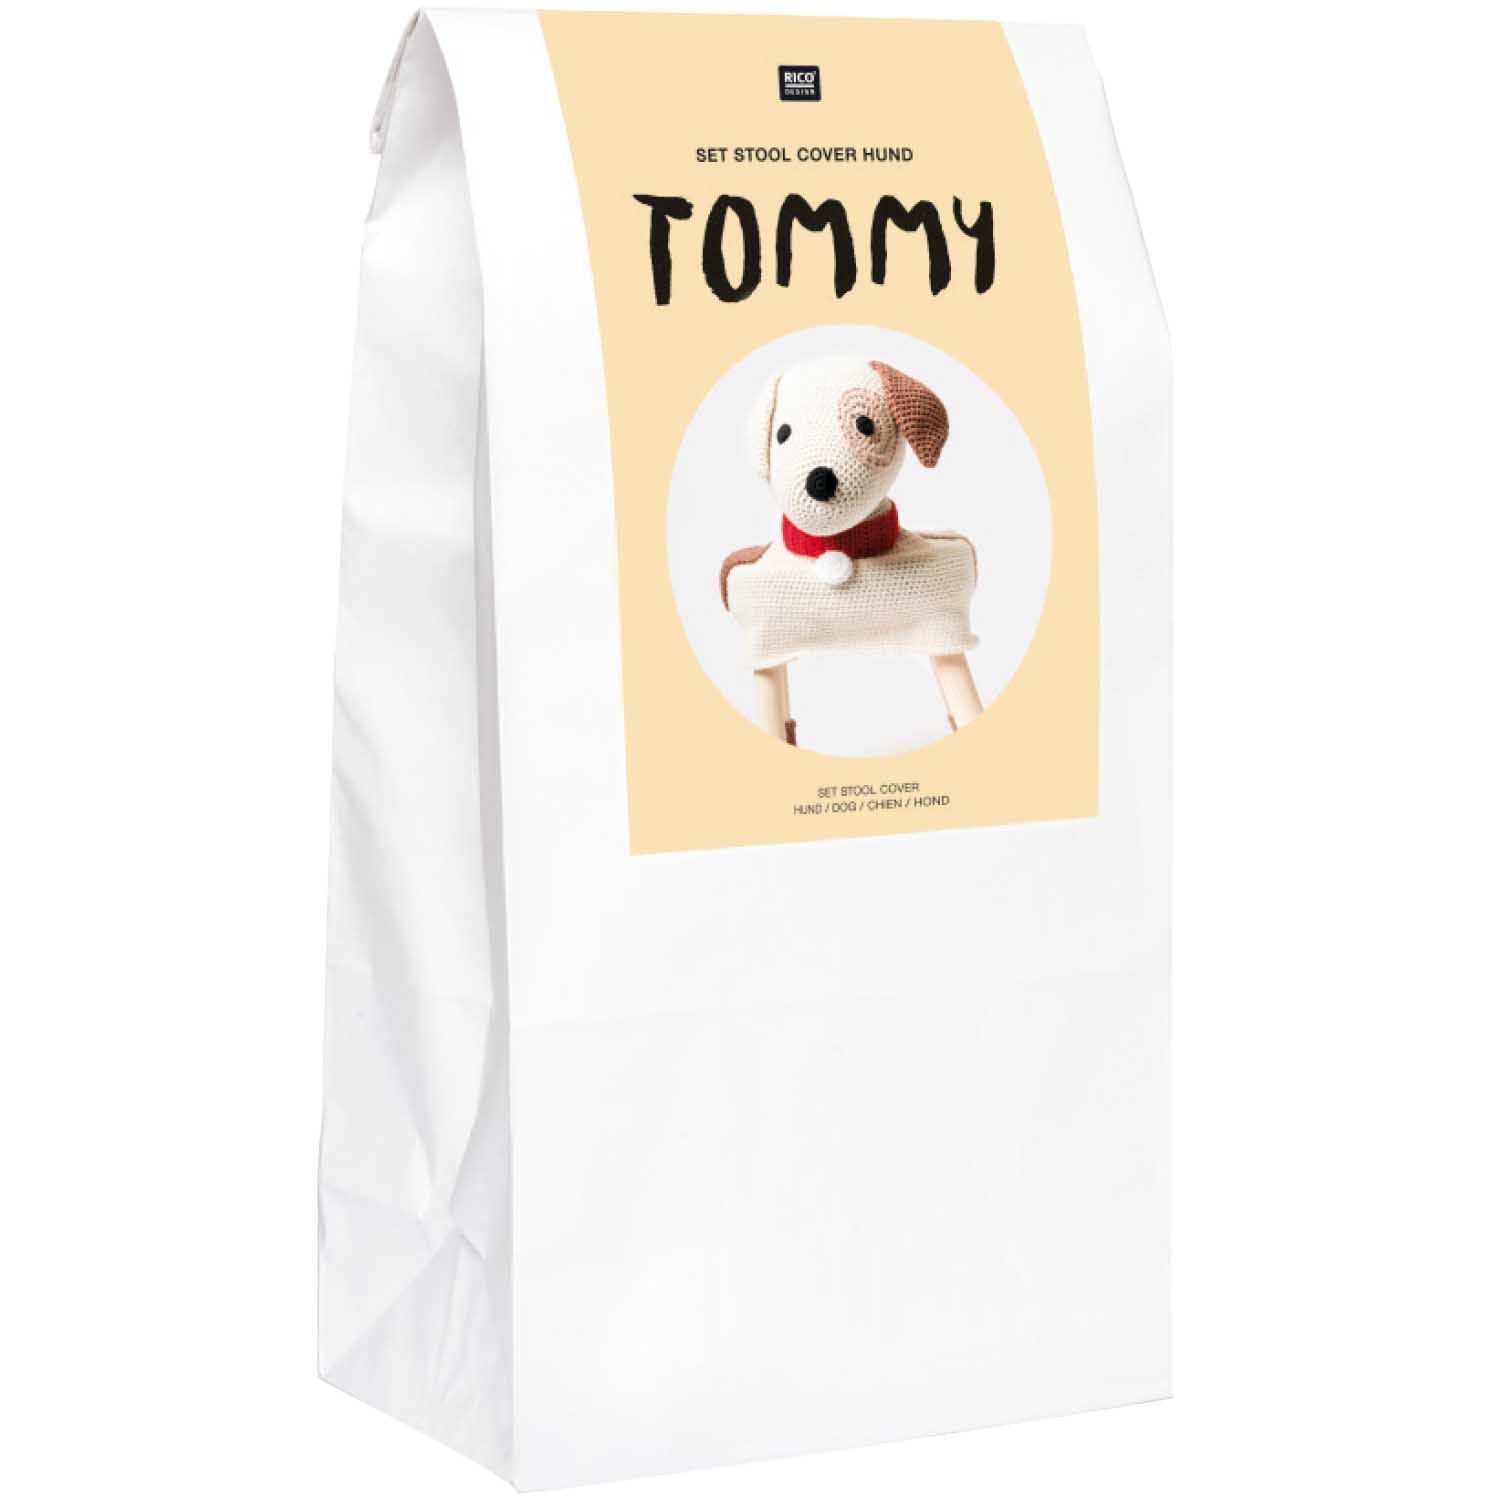 Häkelpaket Stool Cover - Hund 'Tommy'